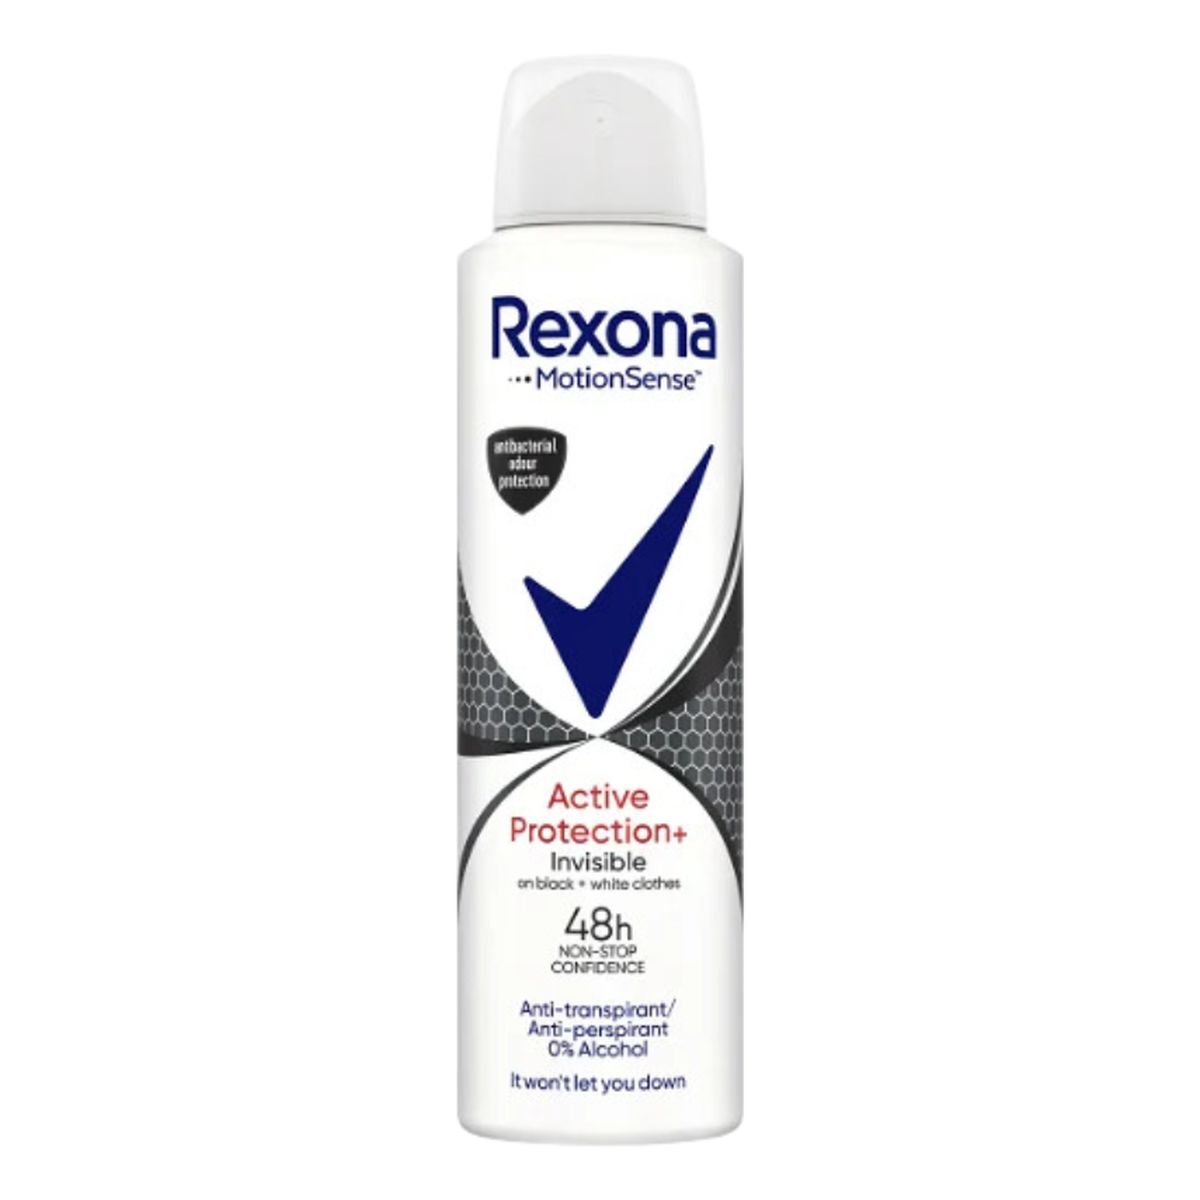 Rexona Active Protection+ Invisible Antyperspirant w sprayu dla kobiet 4x150ml